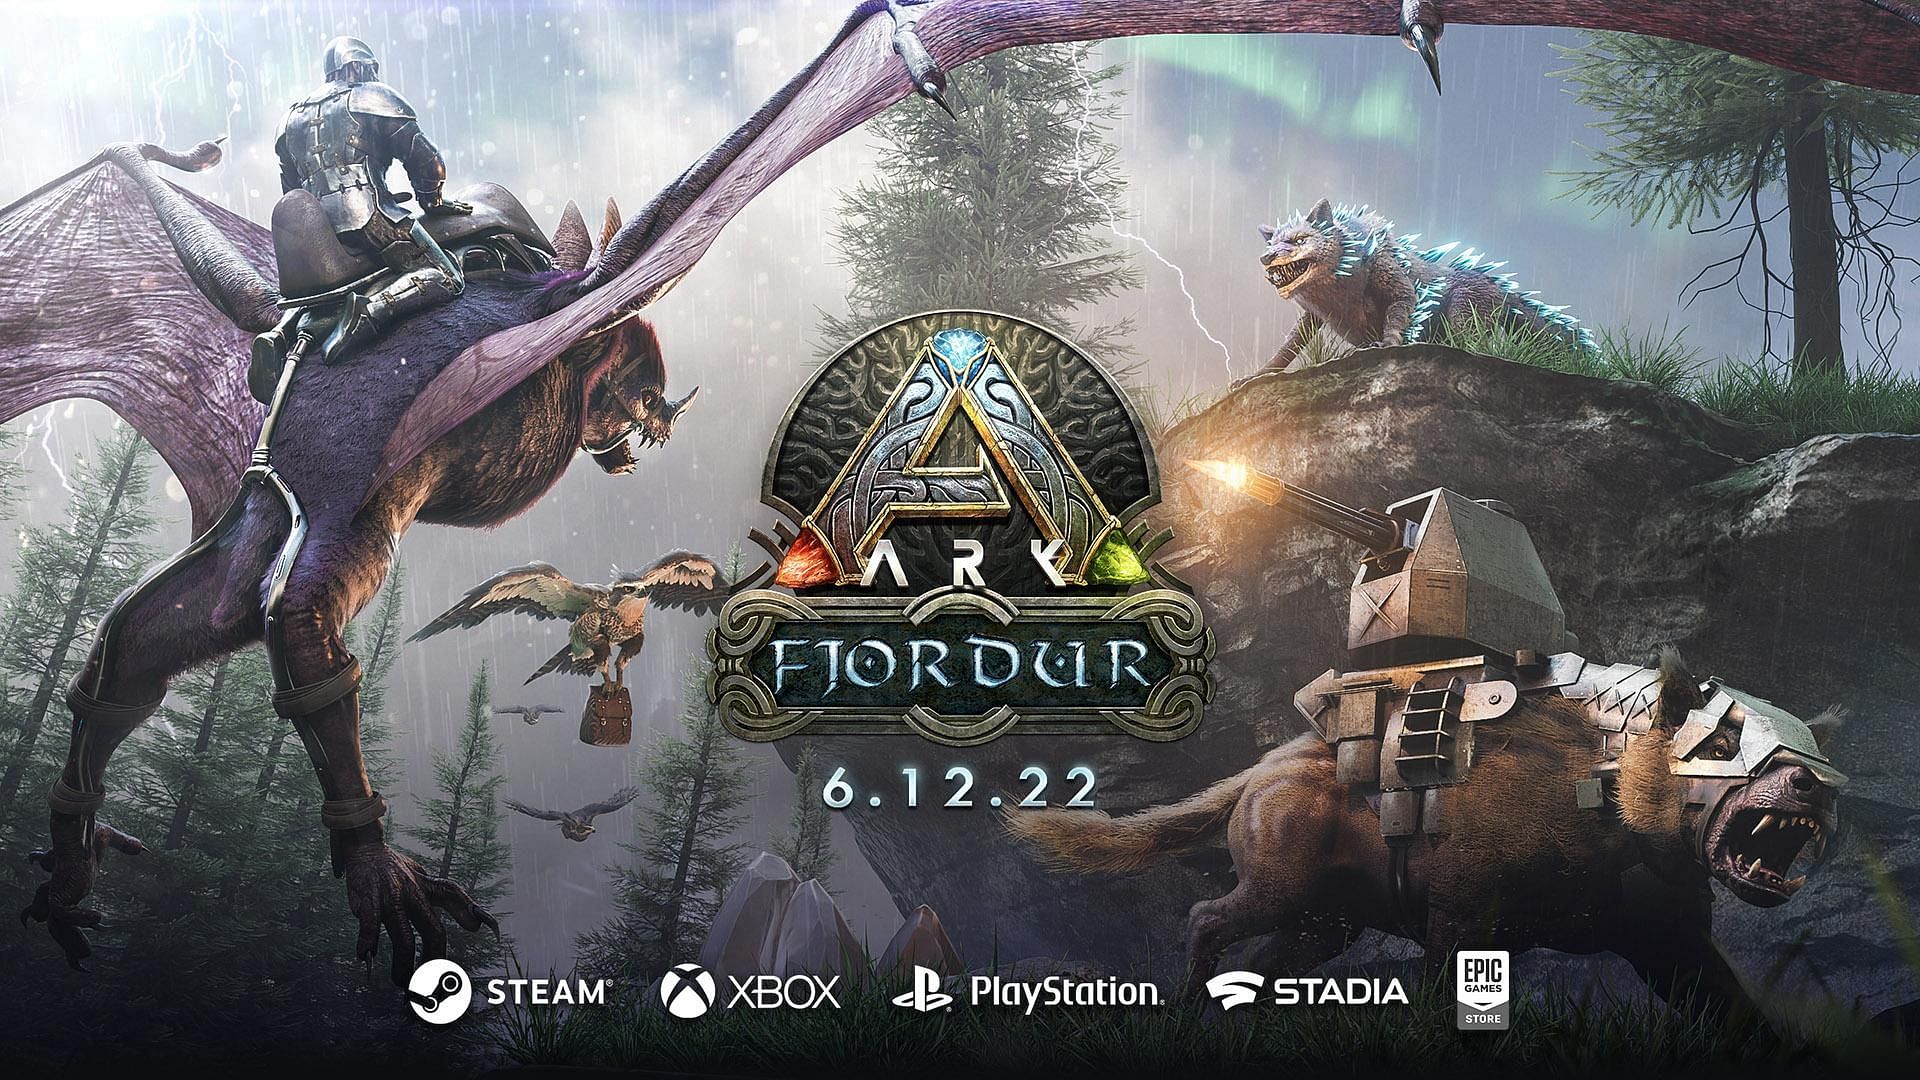 Official artwork for the Fjordur DLC for Ark: Survival Evolved (Image via Steam)